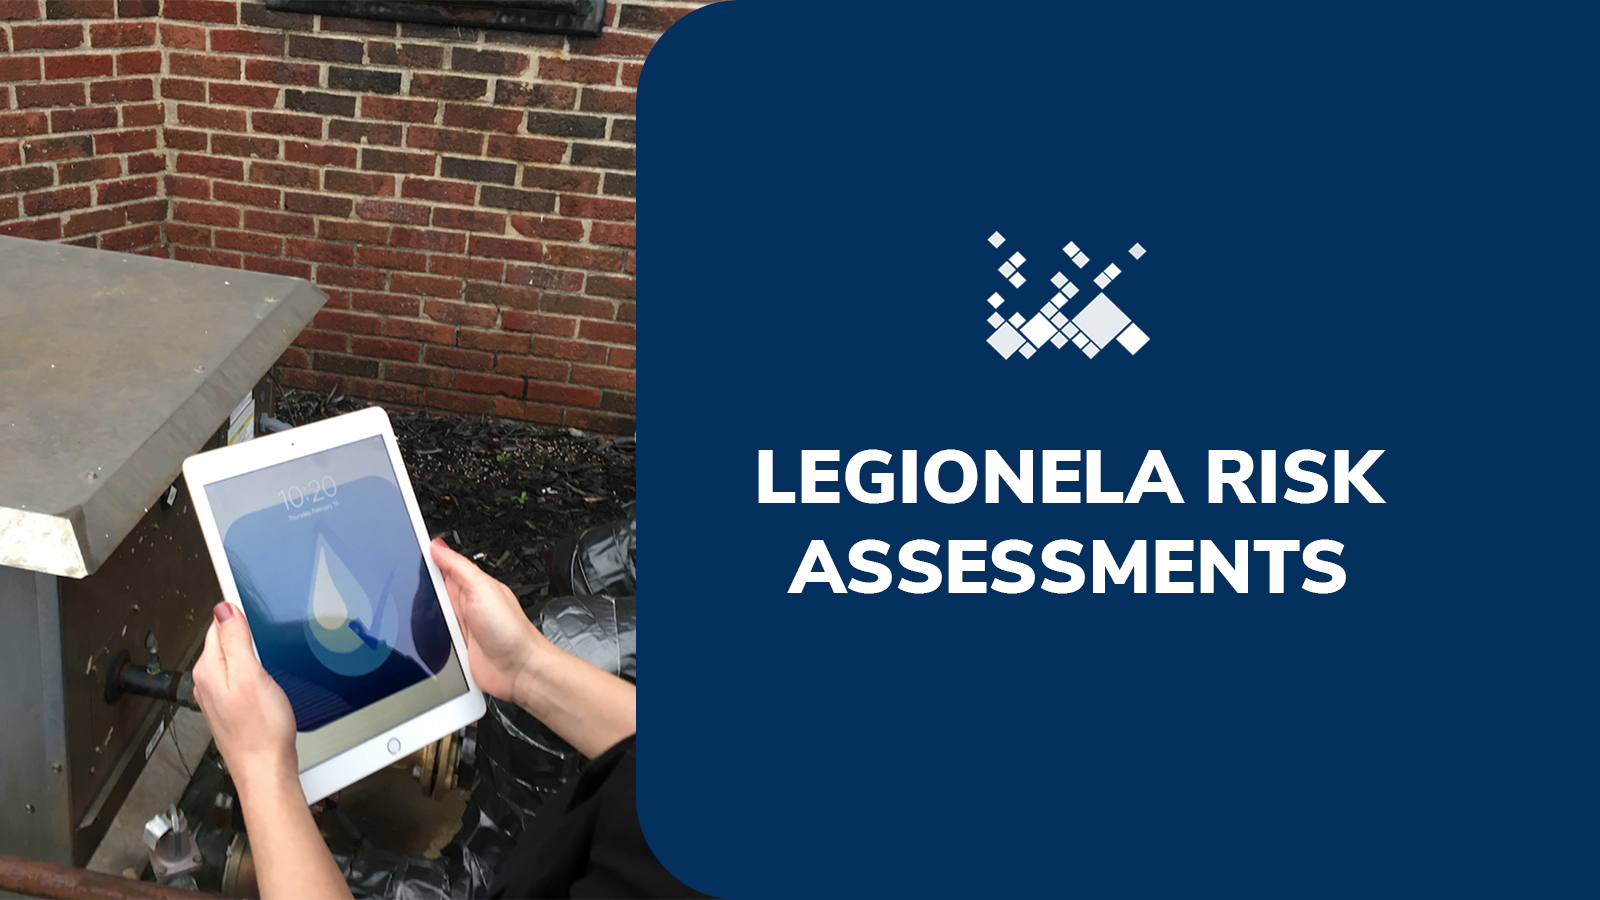 Who Can Complete a Legionella Risk Assessment?